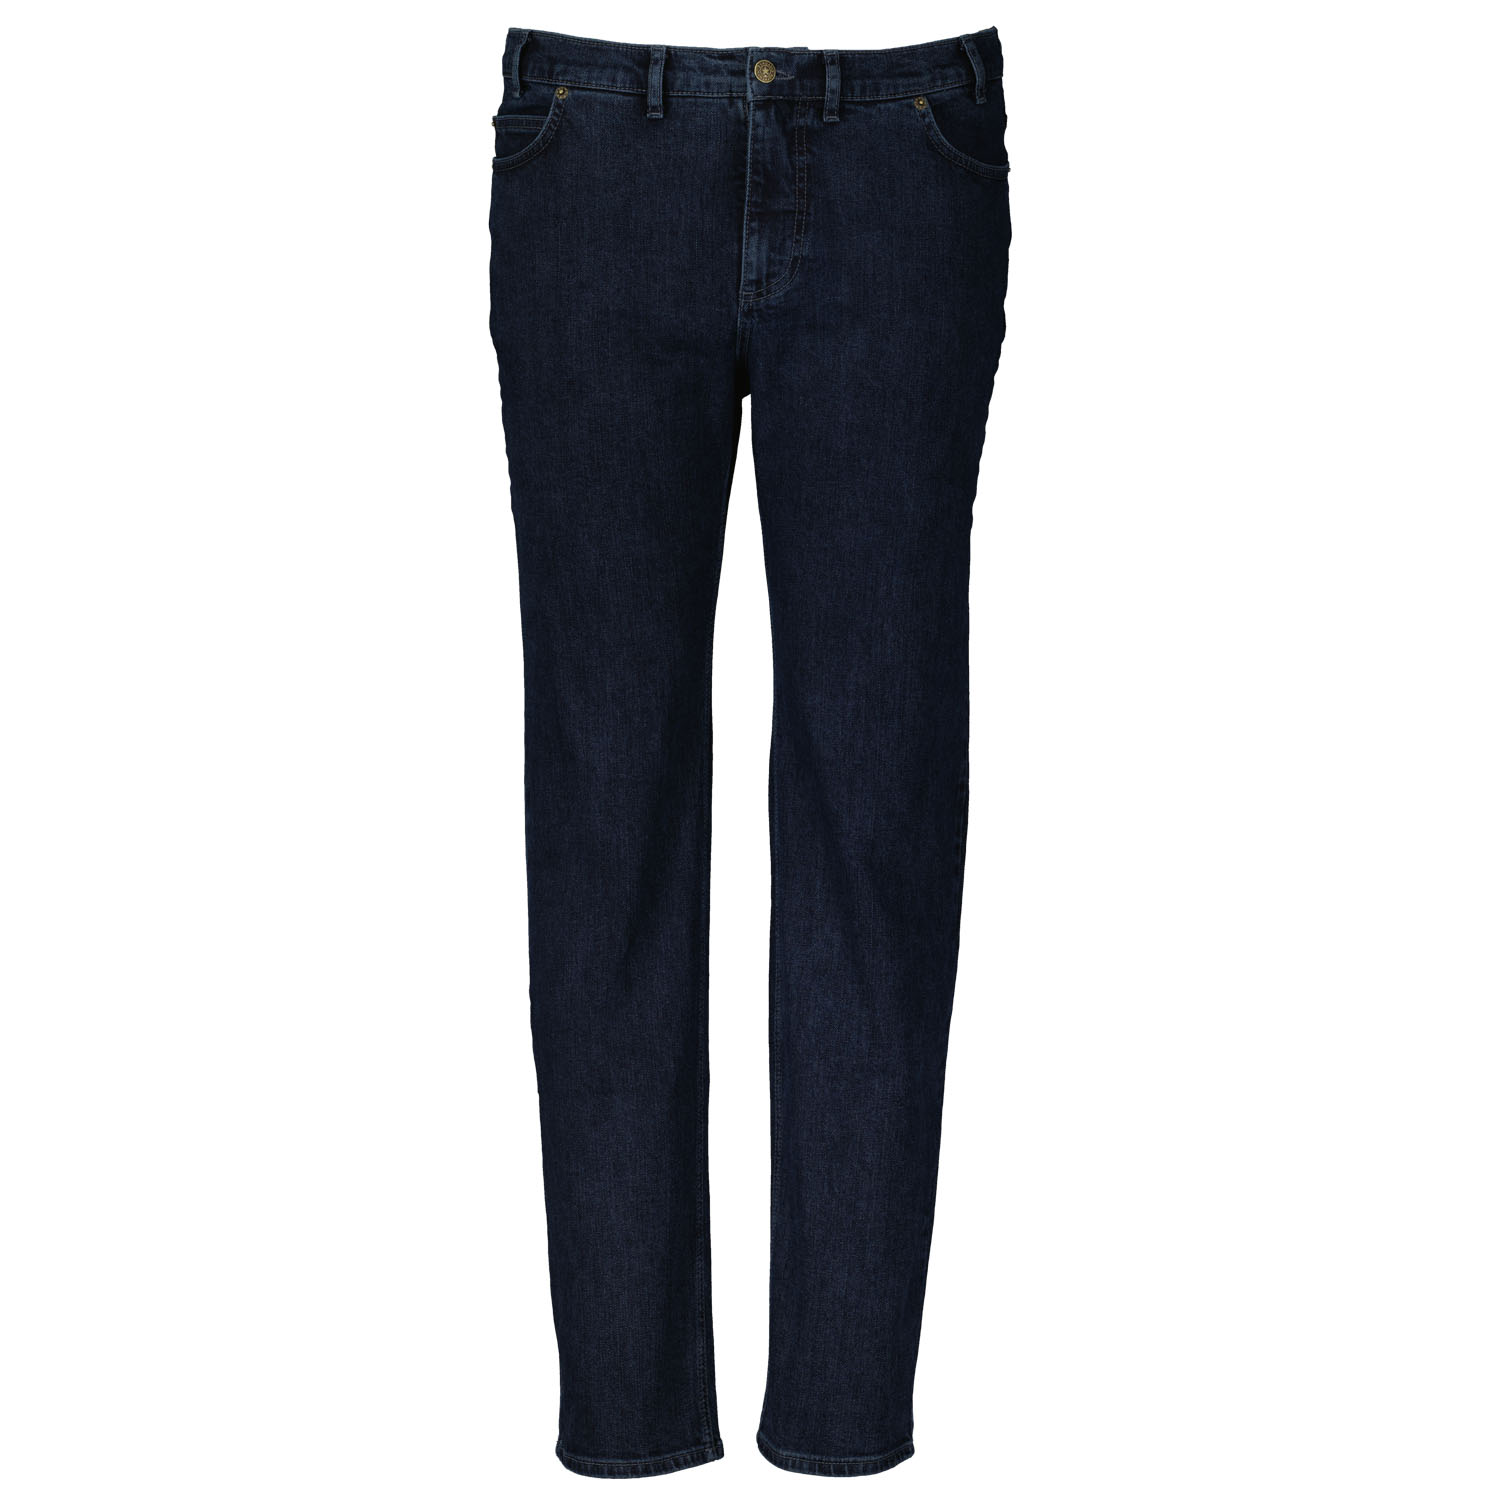 5-Pocket Jeans homme avec stretch série "COLORADO" marine by Adamo grandes tailles (Taille basse): 28 - 40